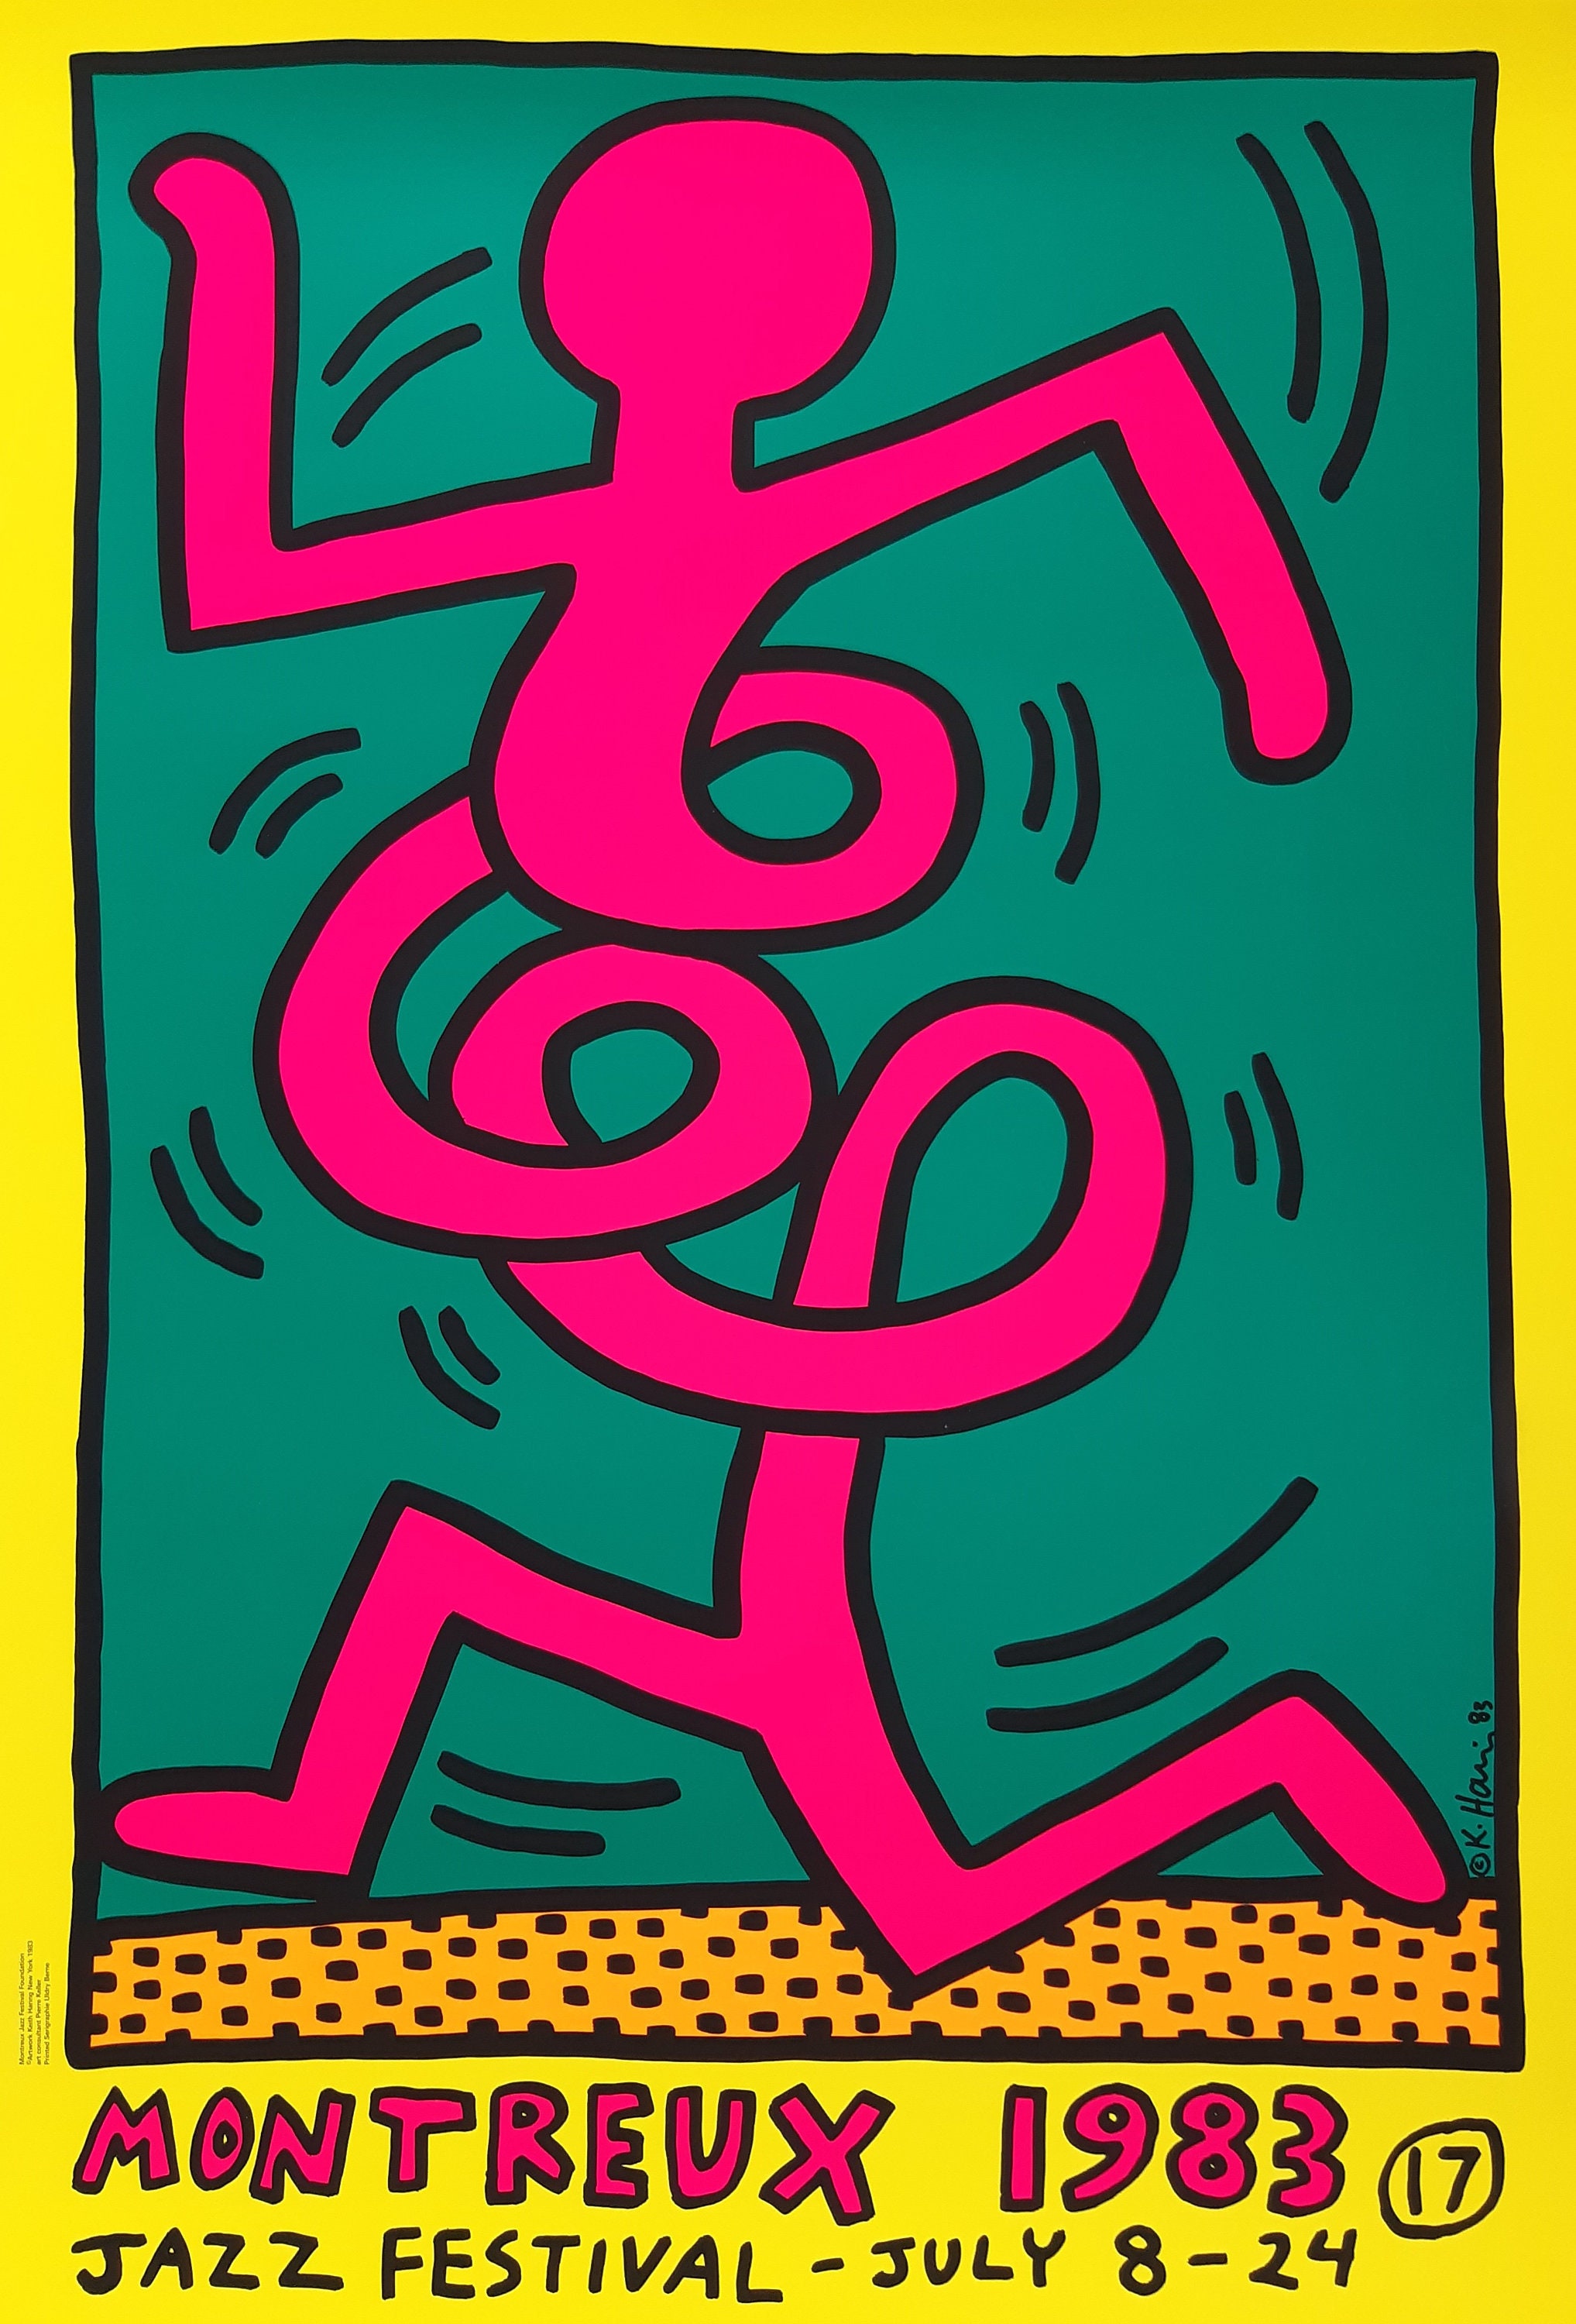 Keith Haring Original Art Poster Etsy